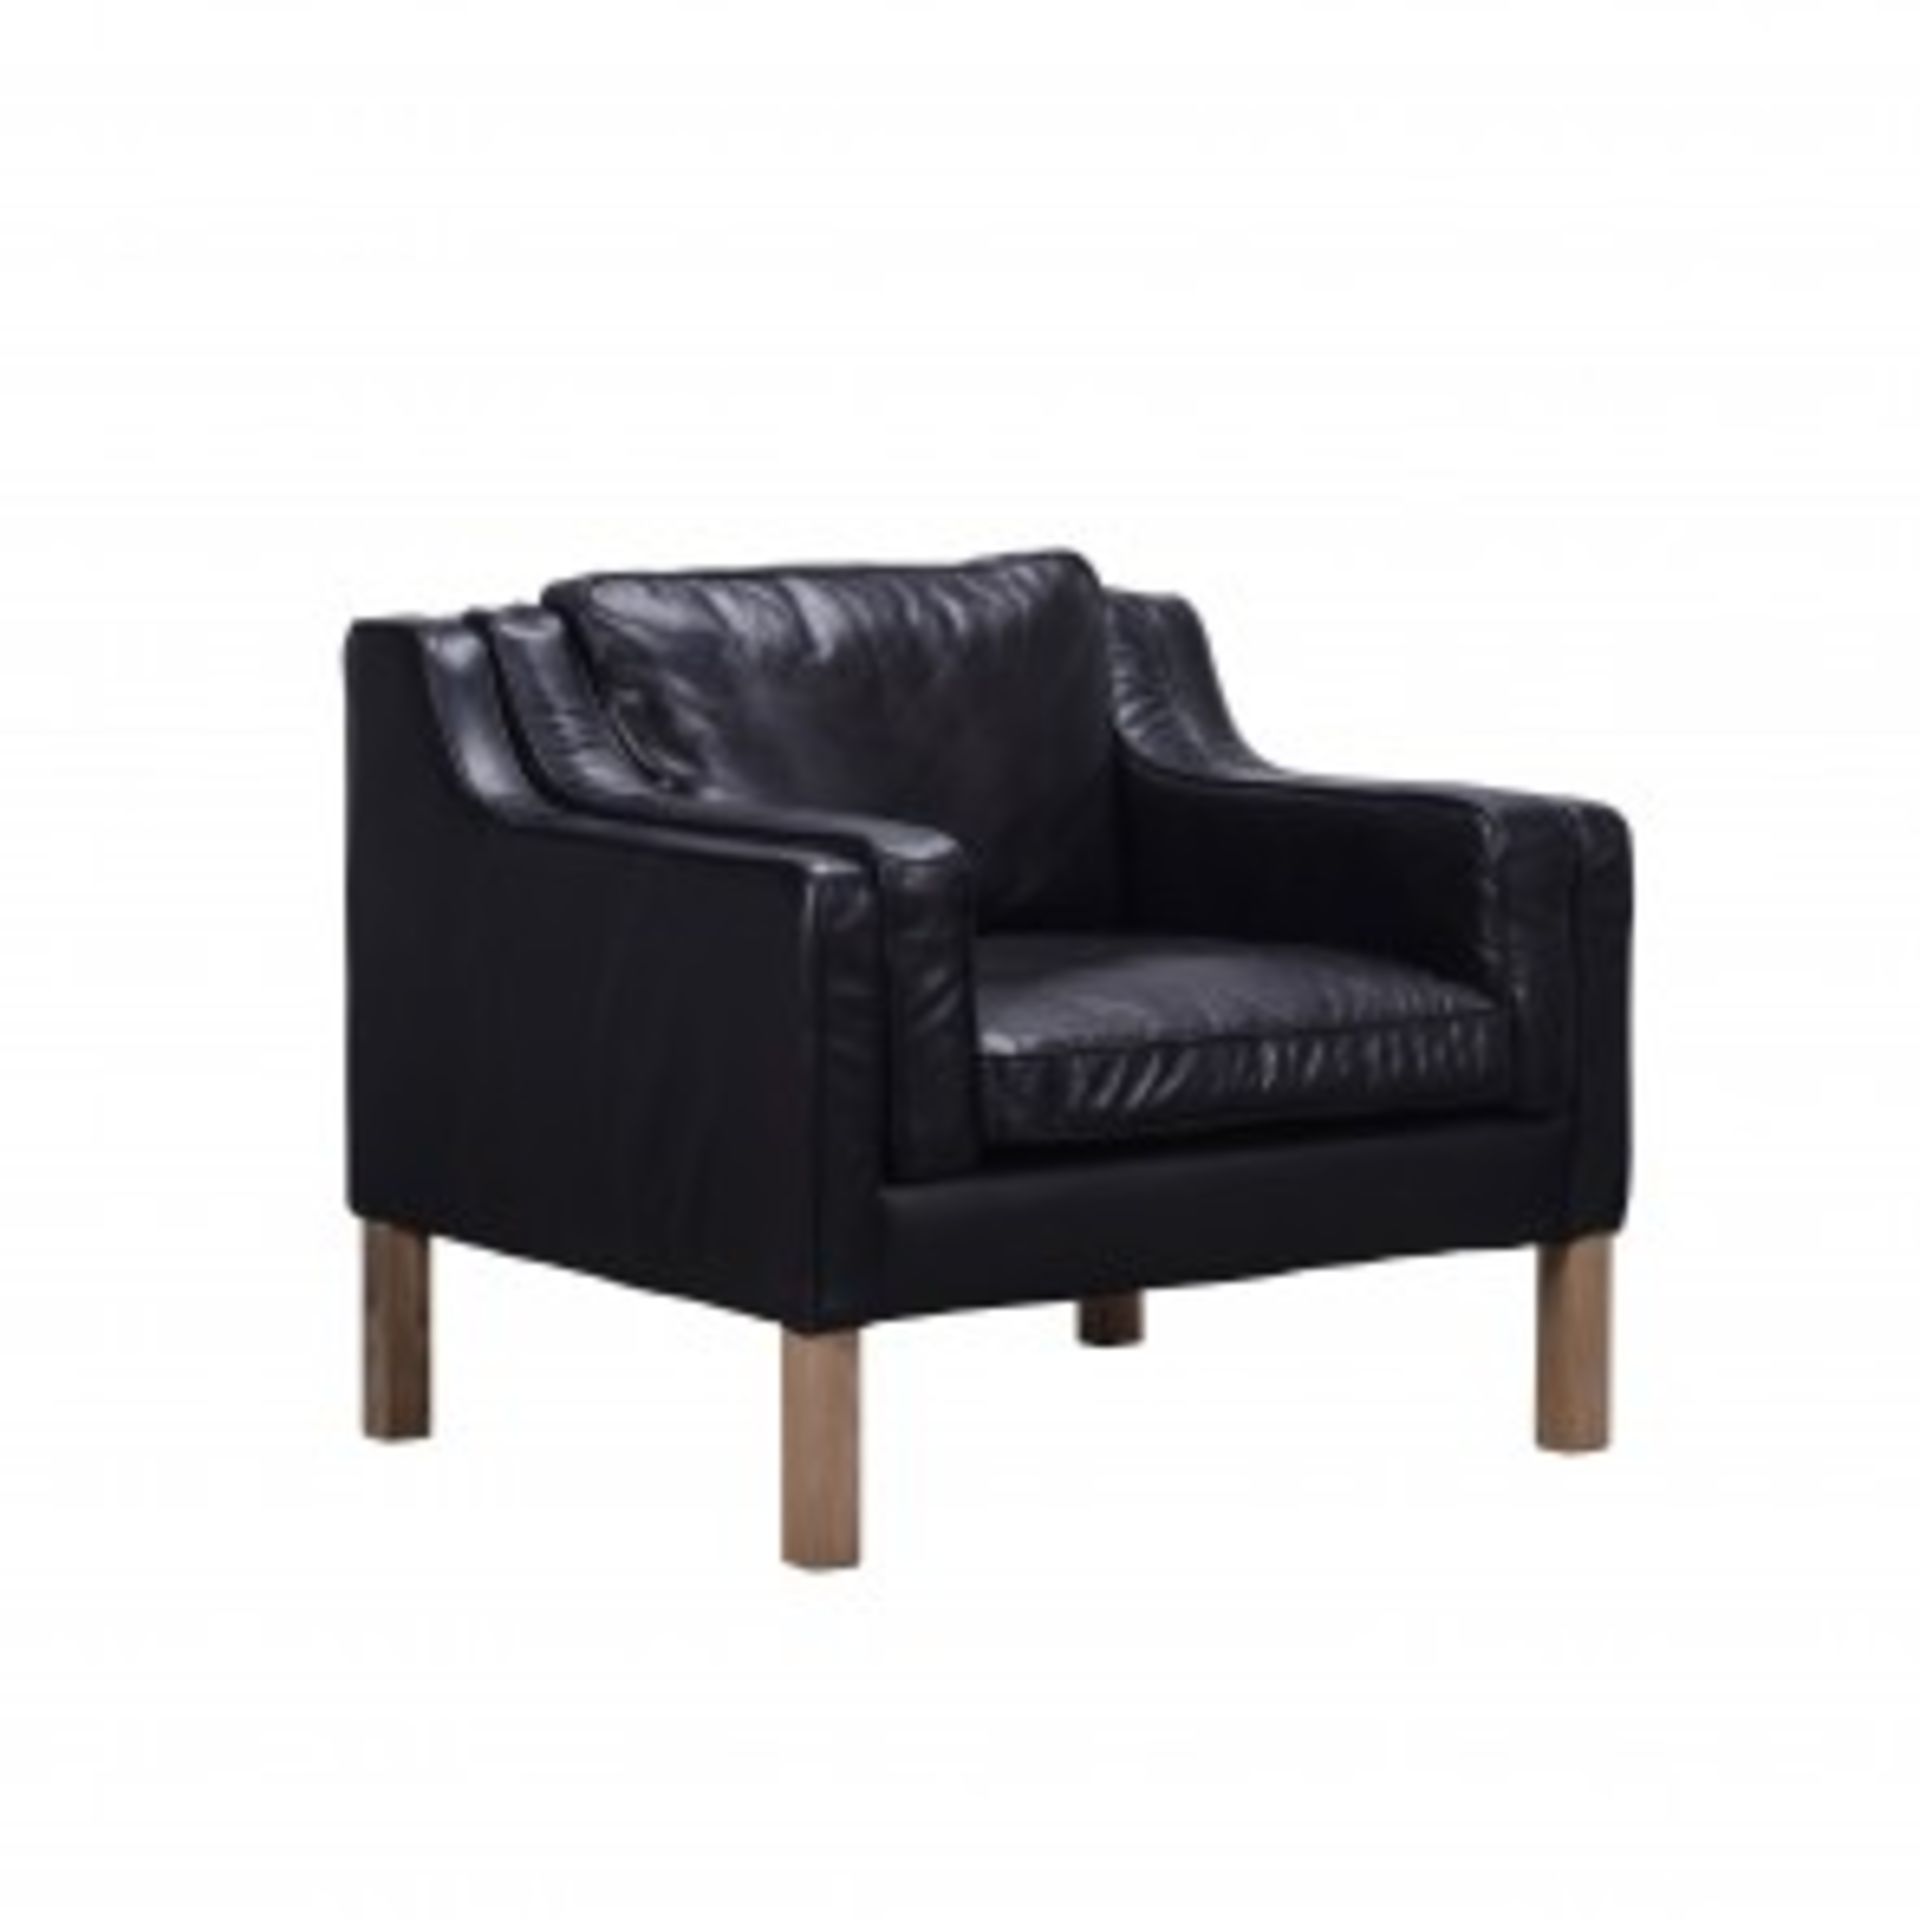 Imesh Sofa 1 Seater Ride Black Leather And Weathered Oak 88 X 79 X 88cm